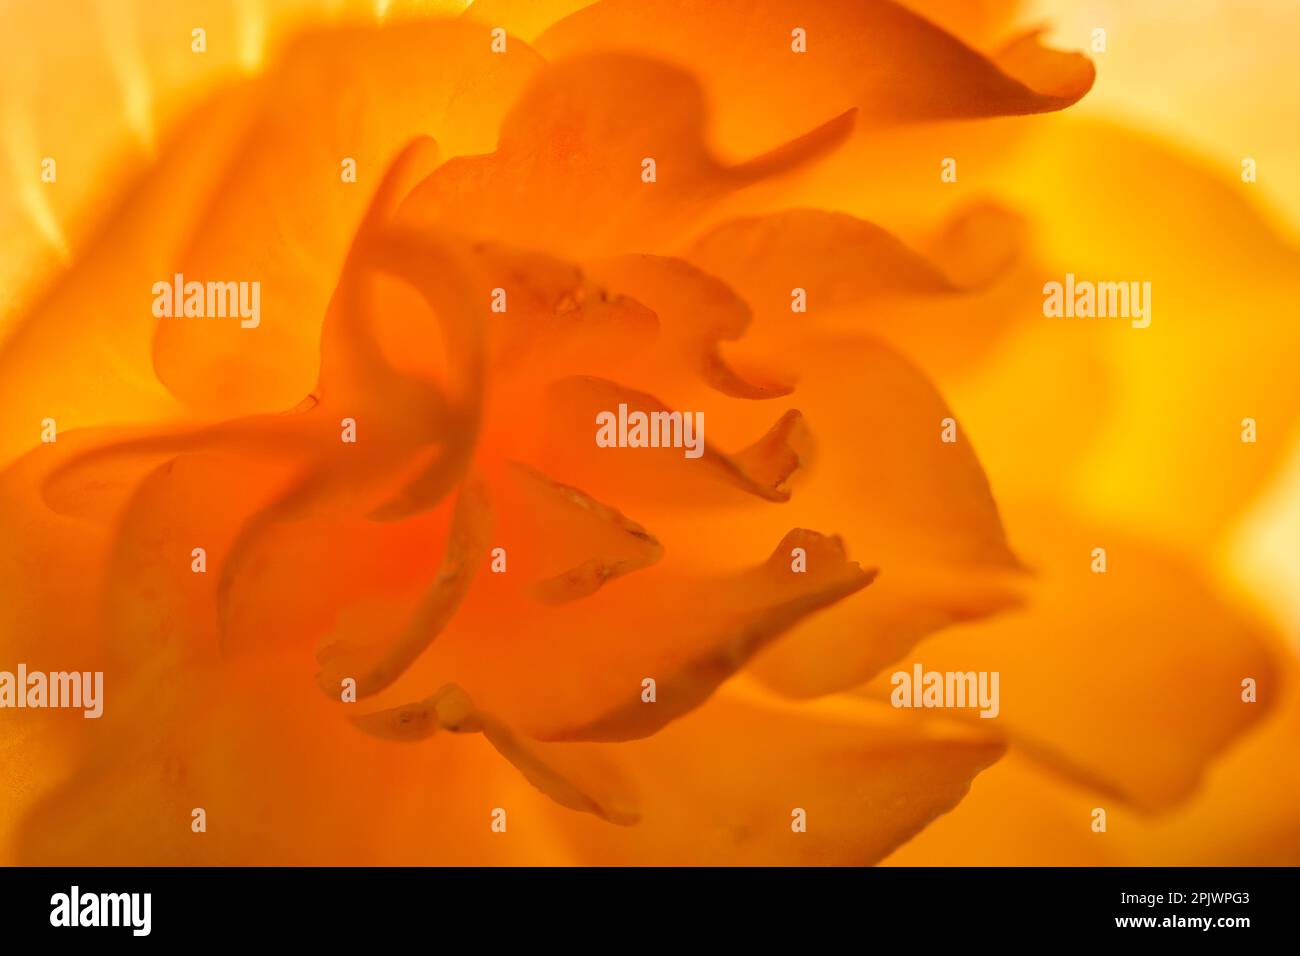 Abstract background - orange begonia flower – close up Stock Photo